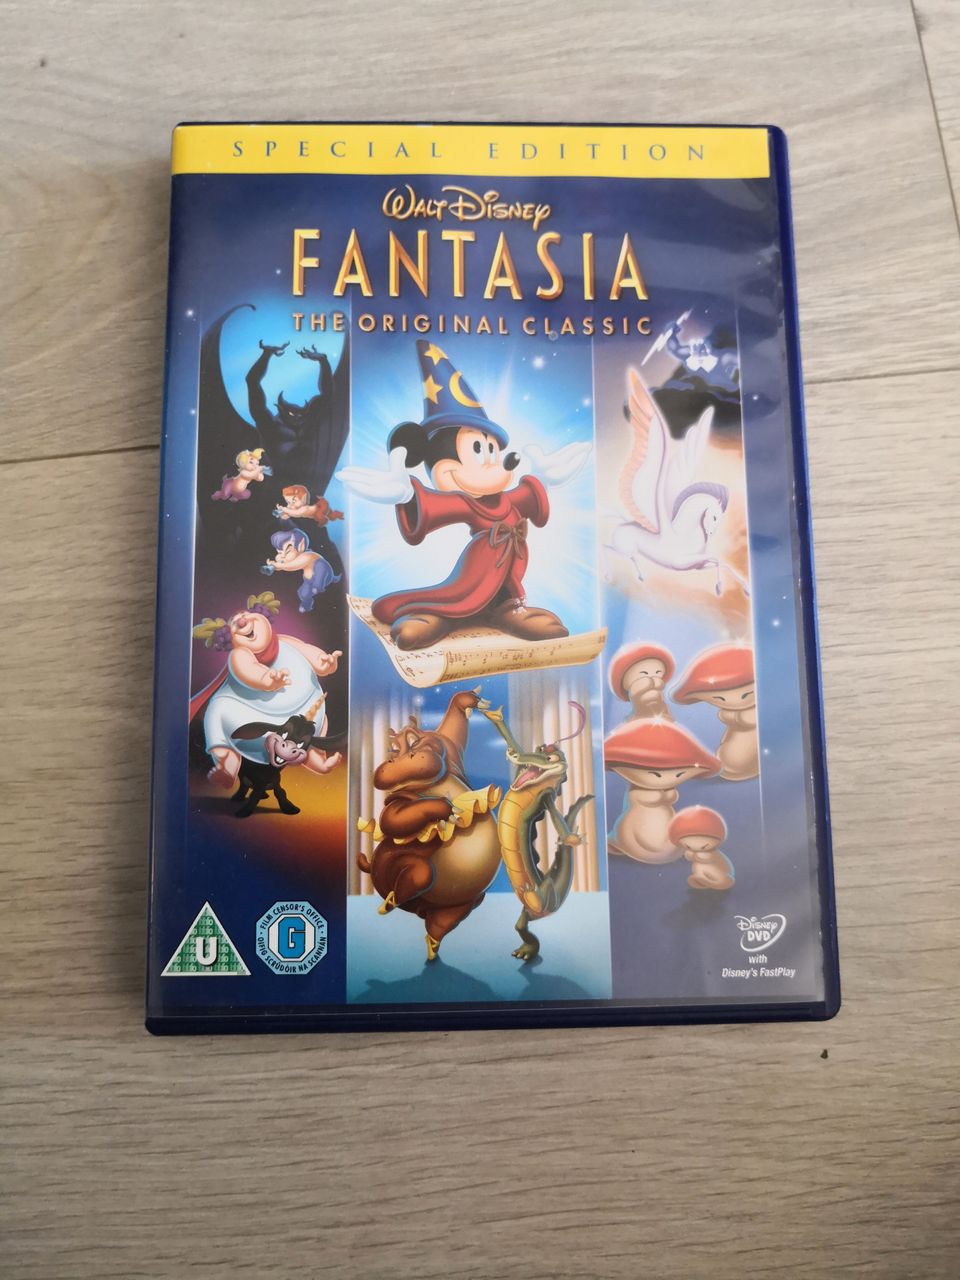 Disneyn Fantasia the original classic special edition DVD